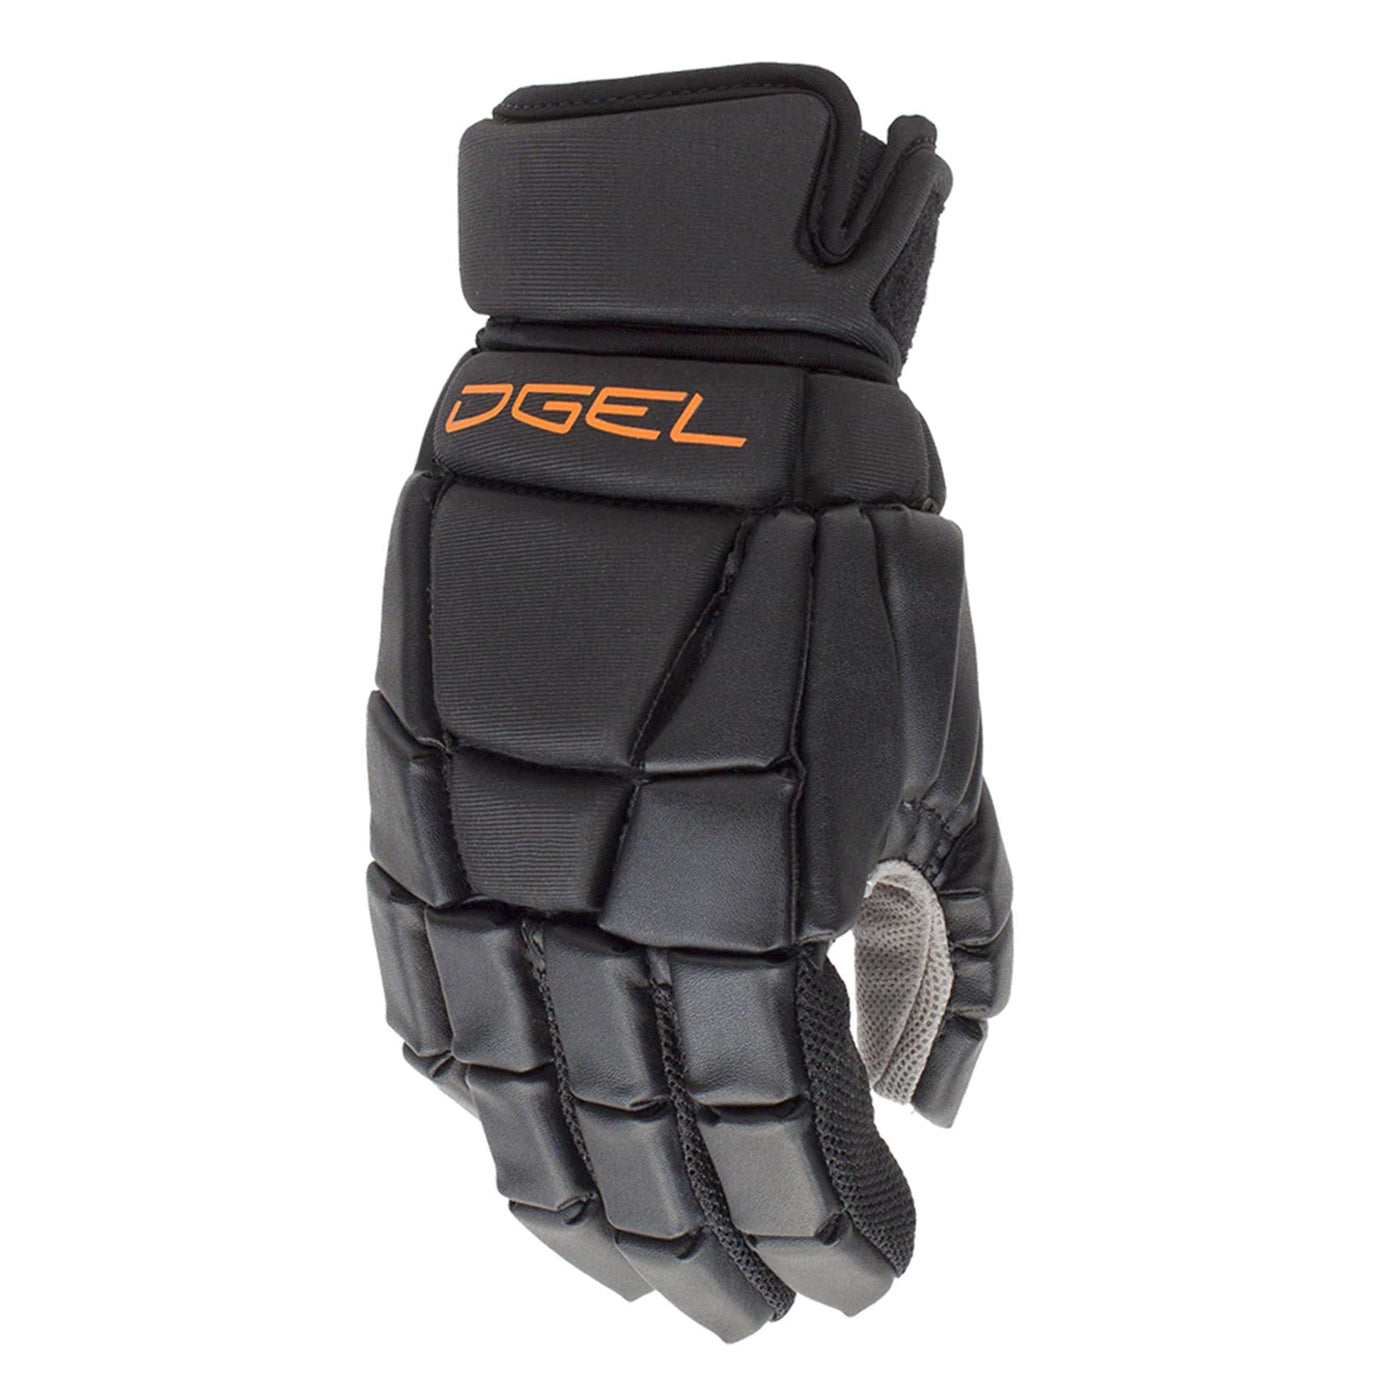 D-Gel 8400 Ball Hockey Glove